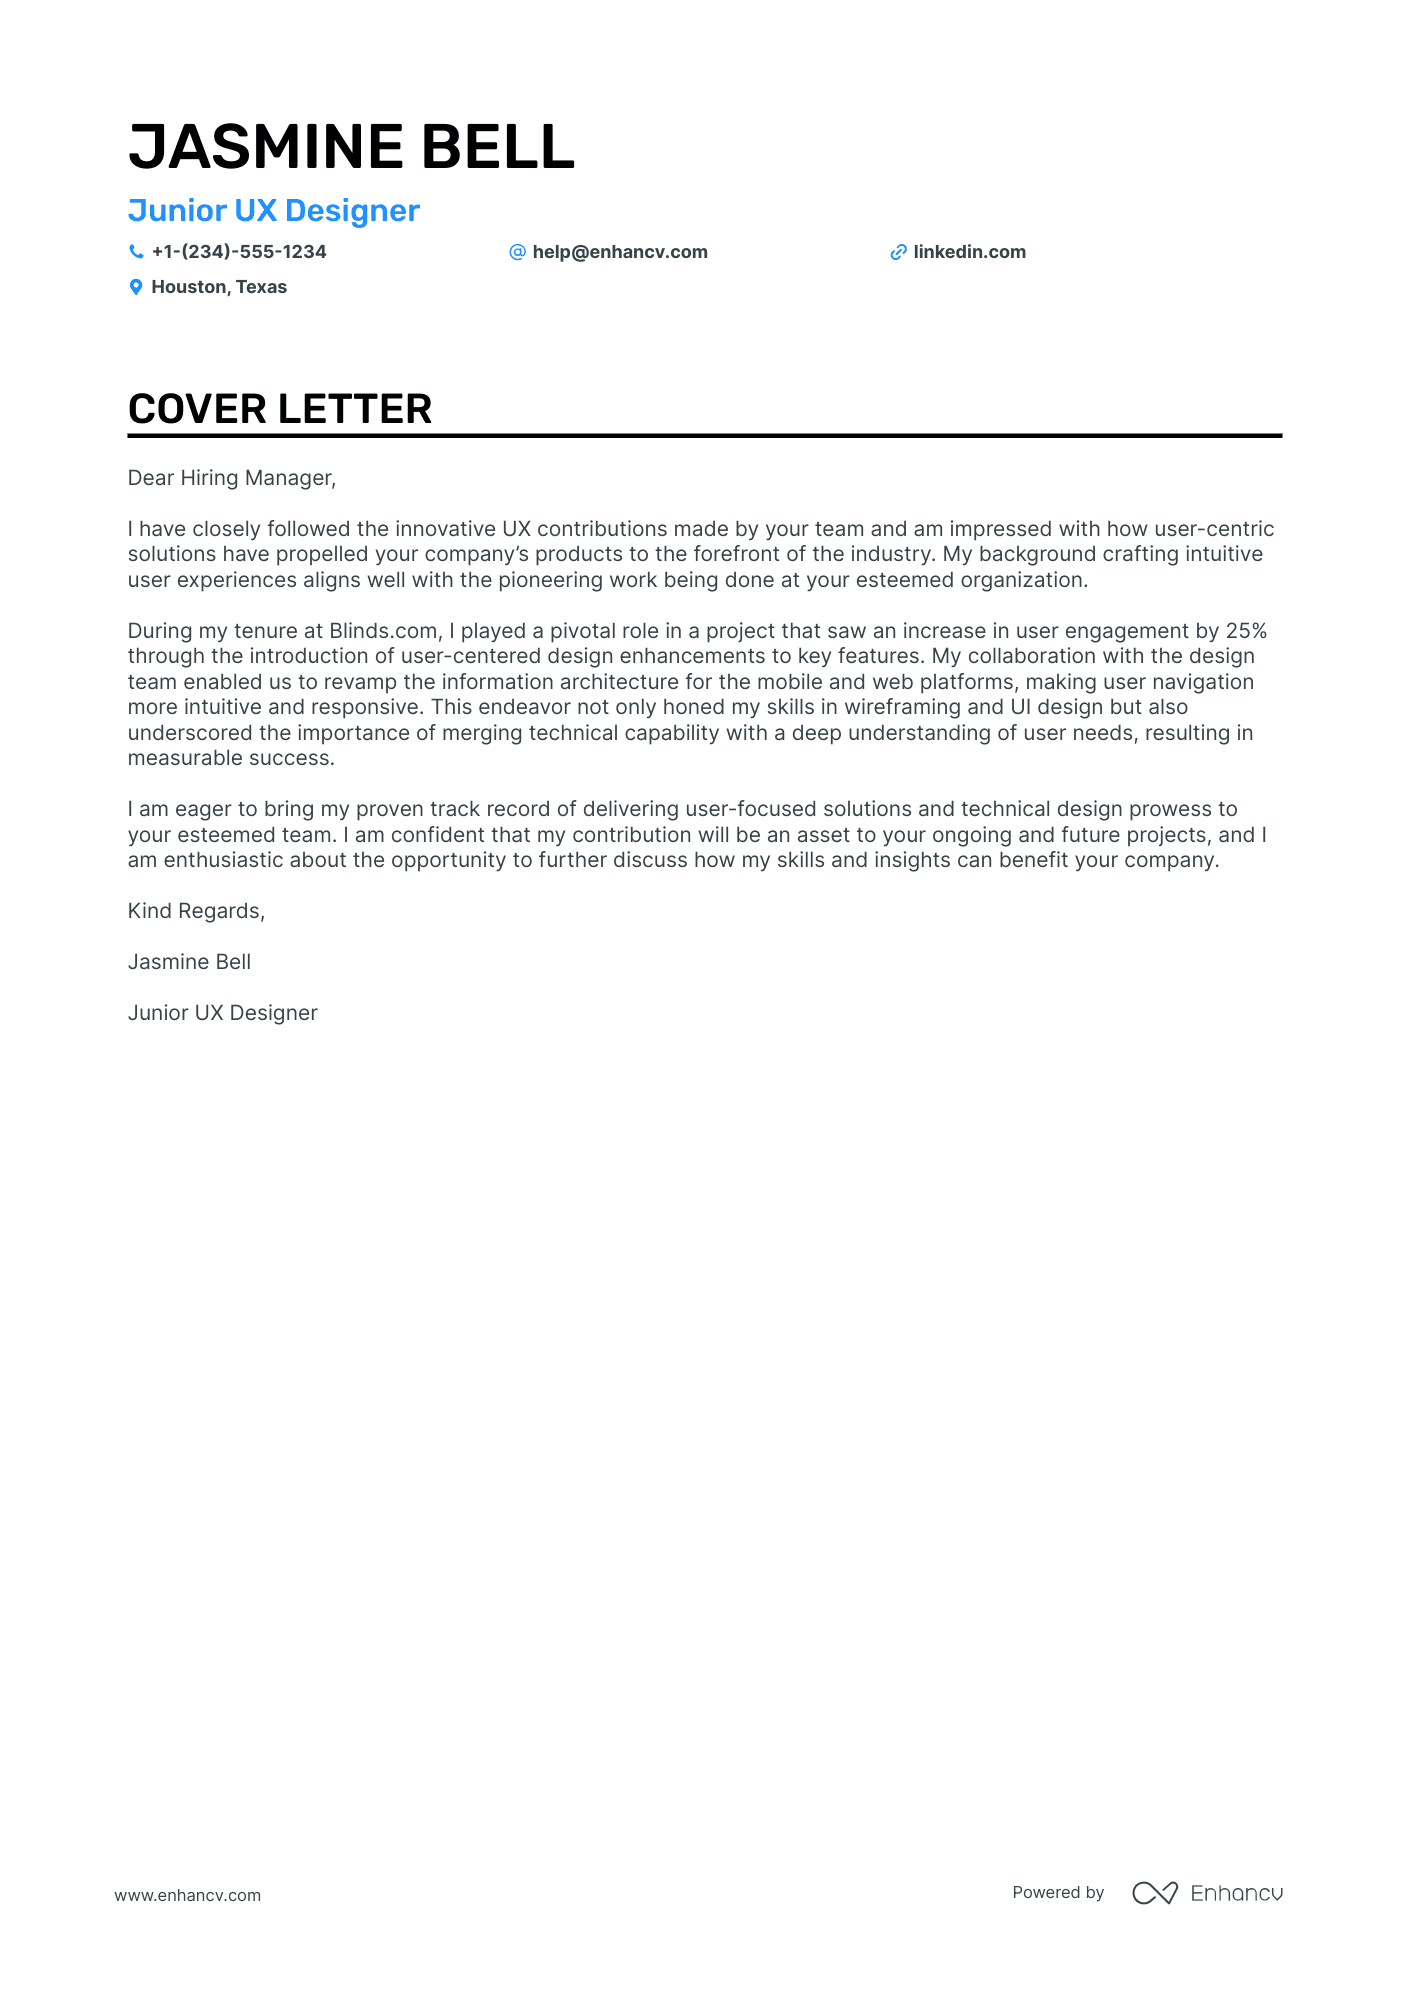 Junior UX Designer cover letter